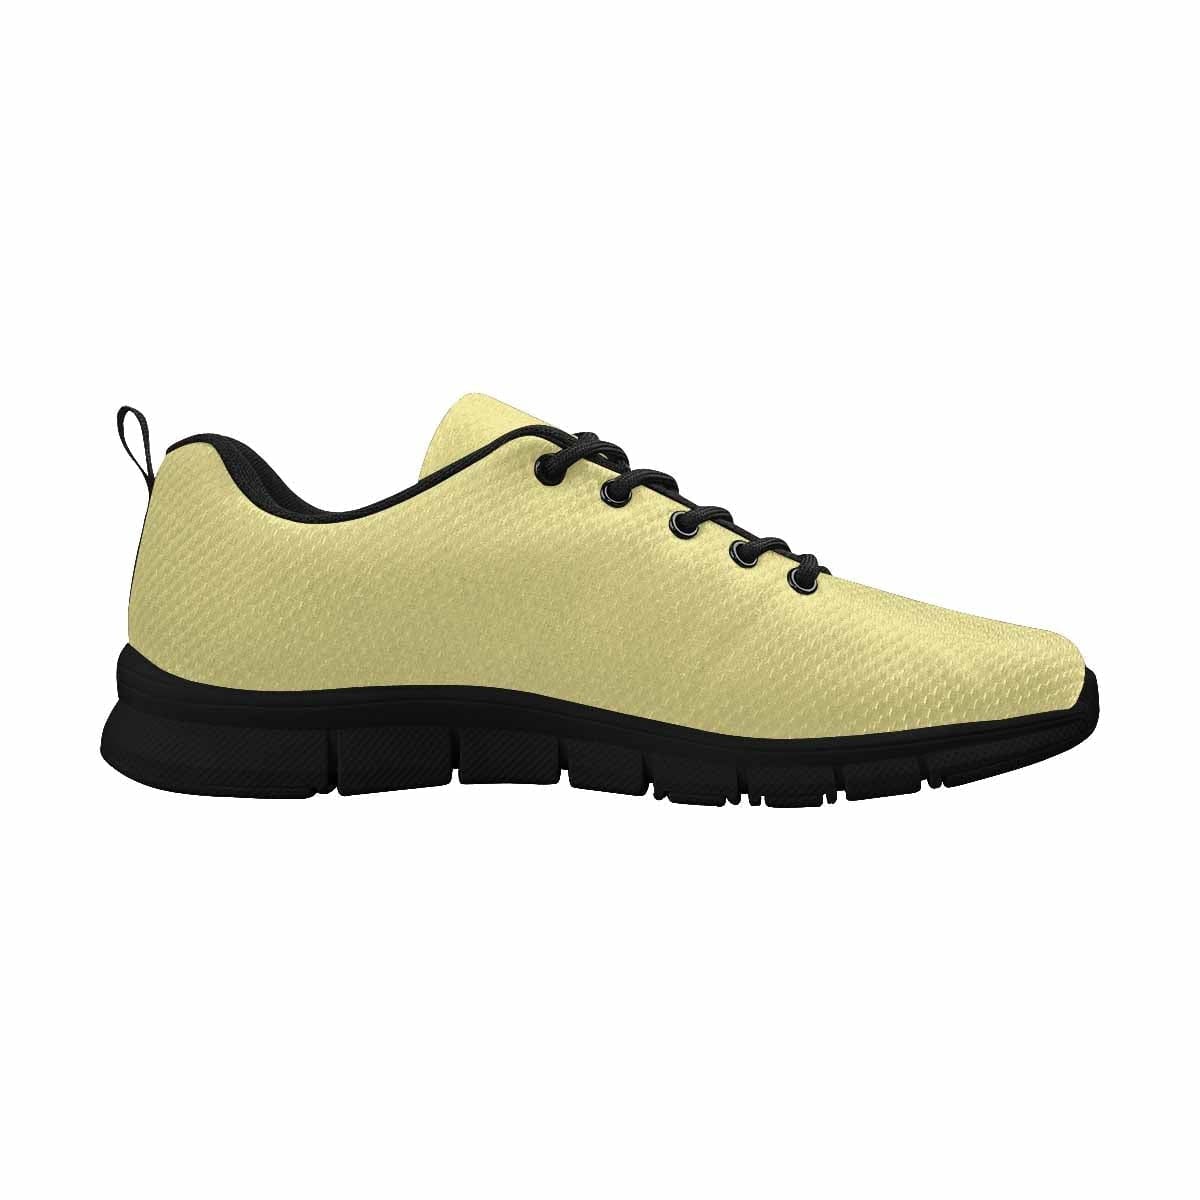 Sneakers For Women Khaki Yellow - Womens | Sneakers | Running